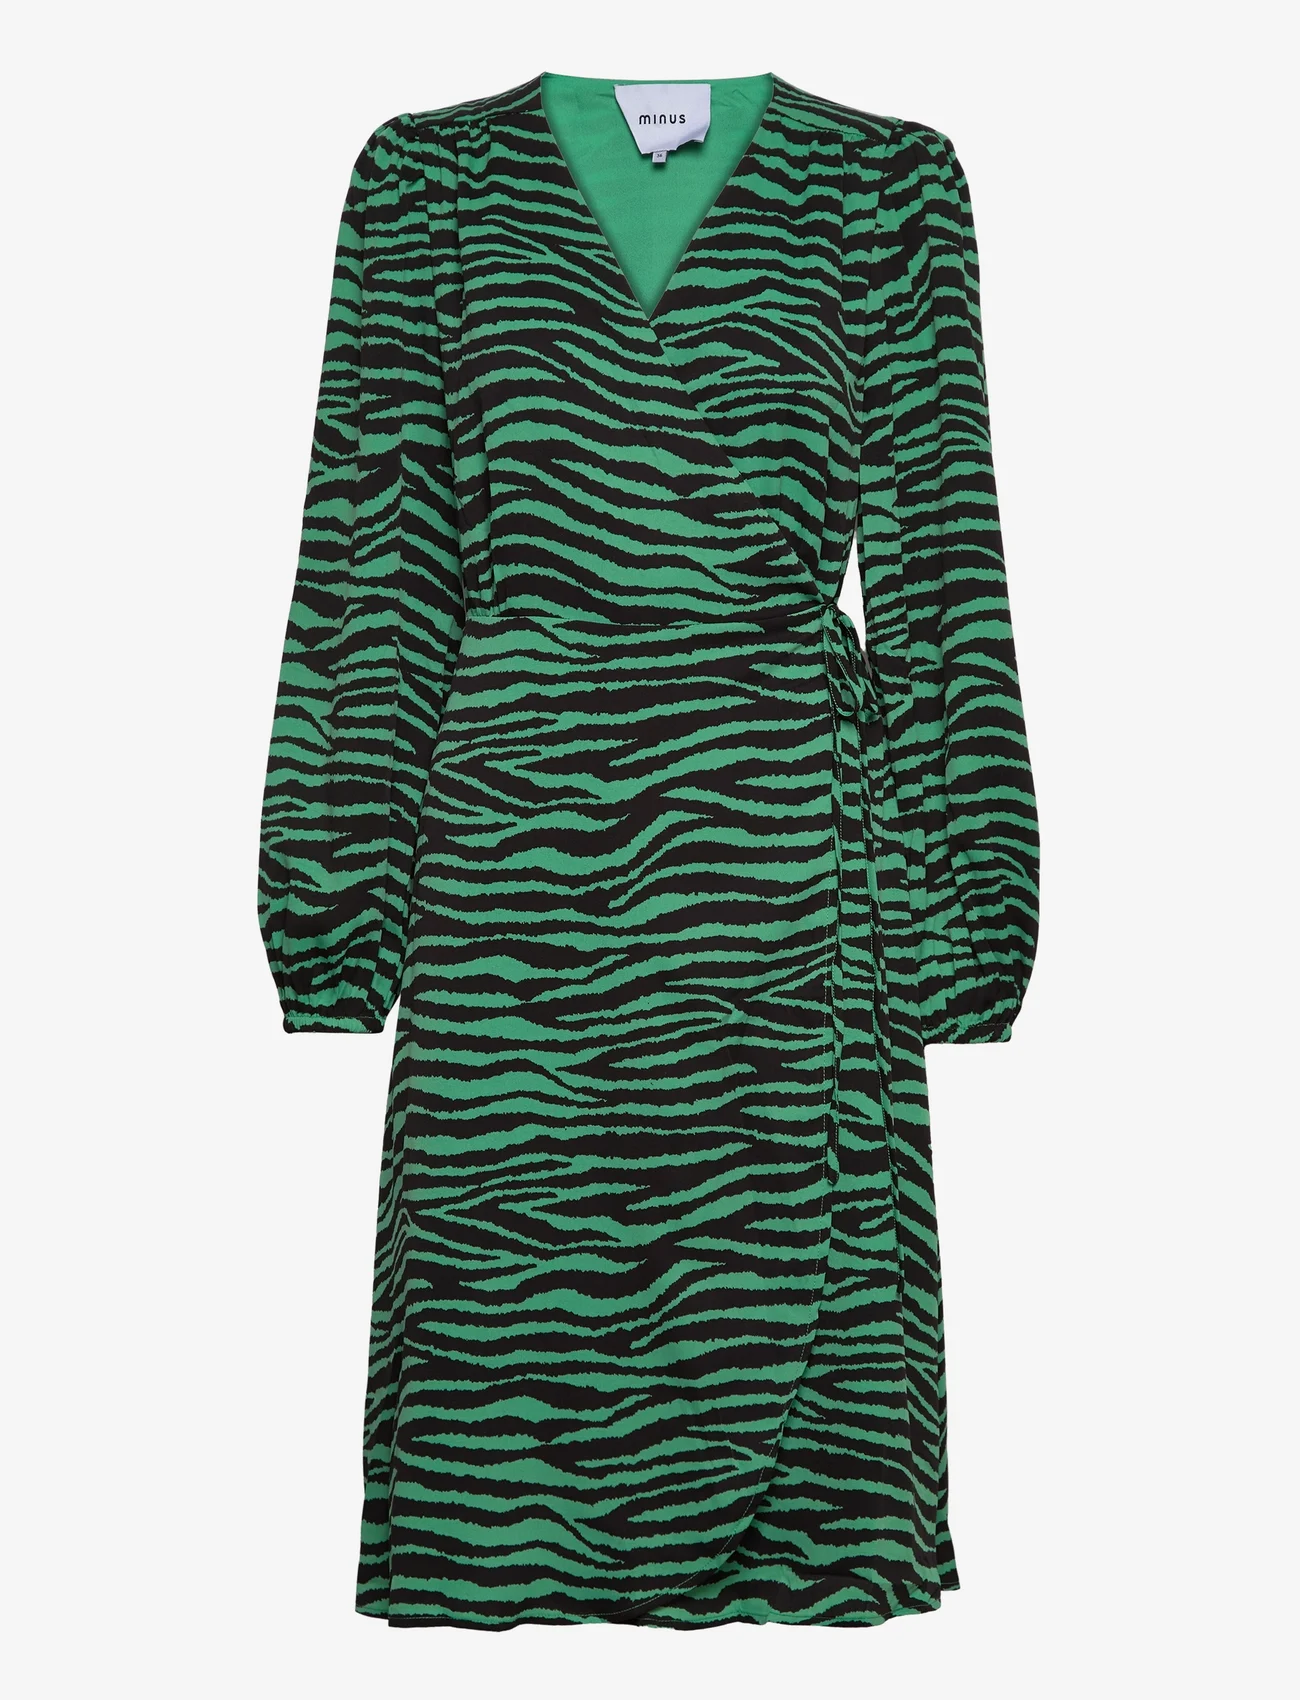 Minus - Evelyn Wrap Dress - wickelkleider - apple green animal print - 0